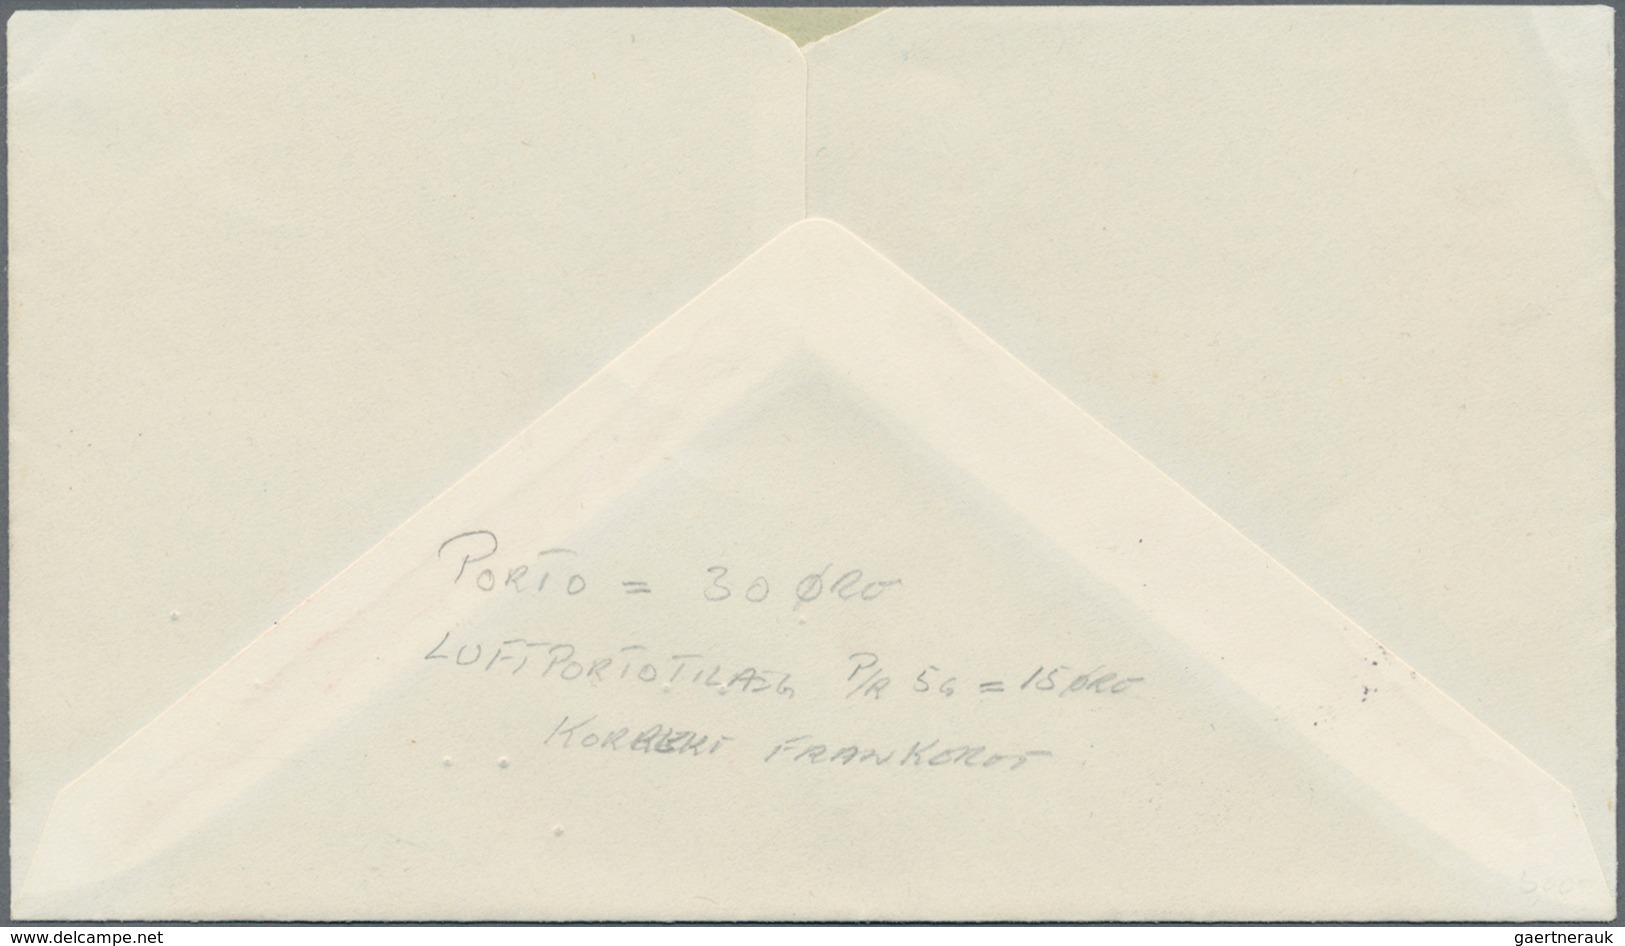 Dänemark - Grönland: 1953, Airmail Cover With Exact Postage, From "Tingmiarmiut 14.10.53" To Copenha - Briefe U. Dokumente